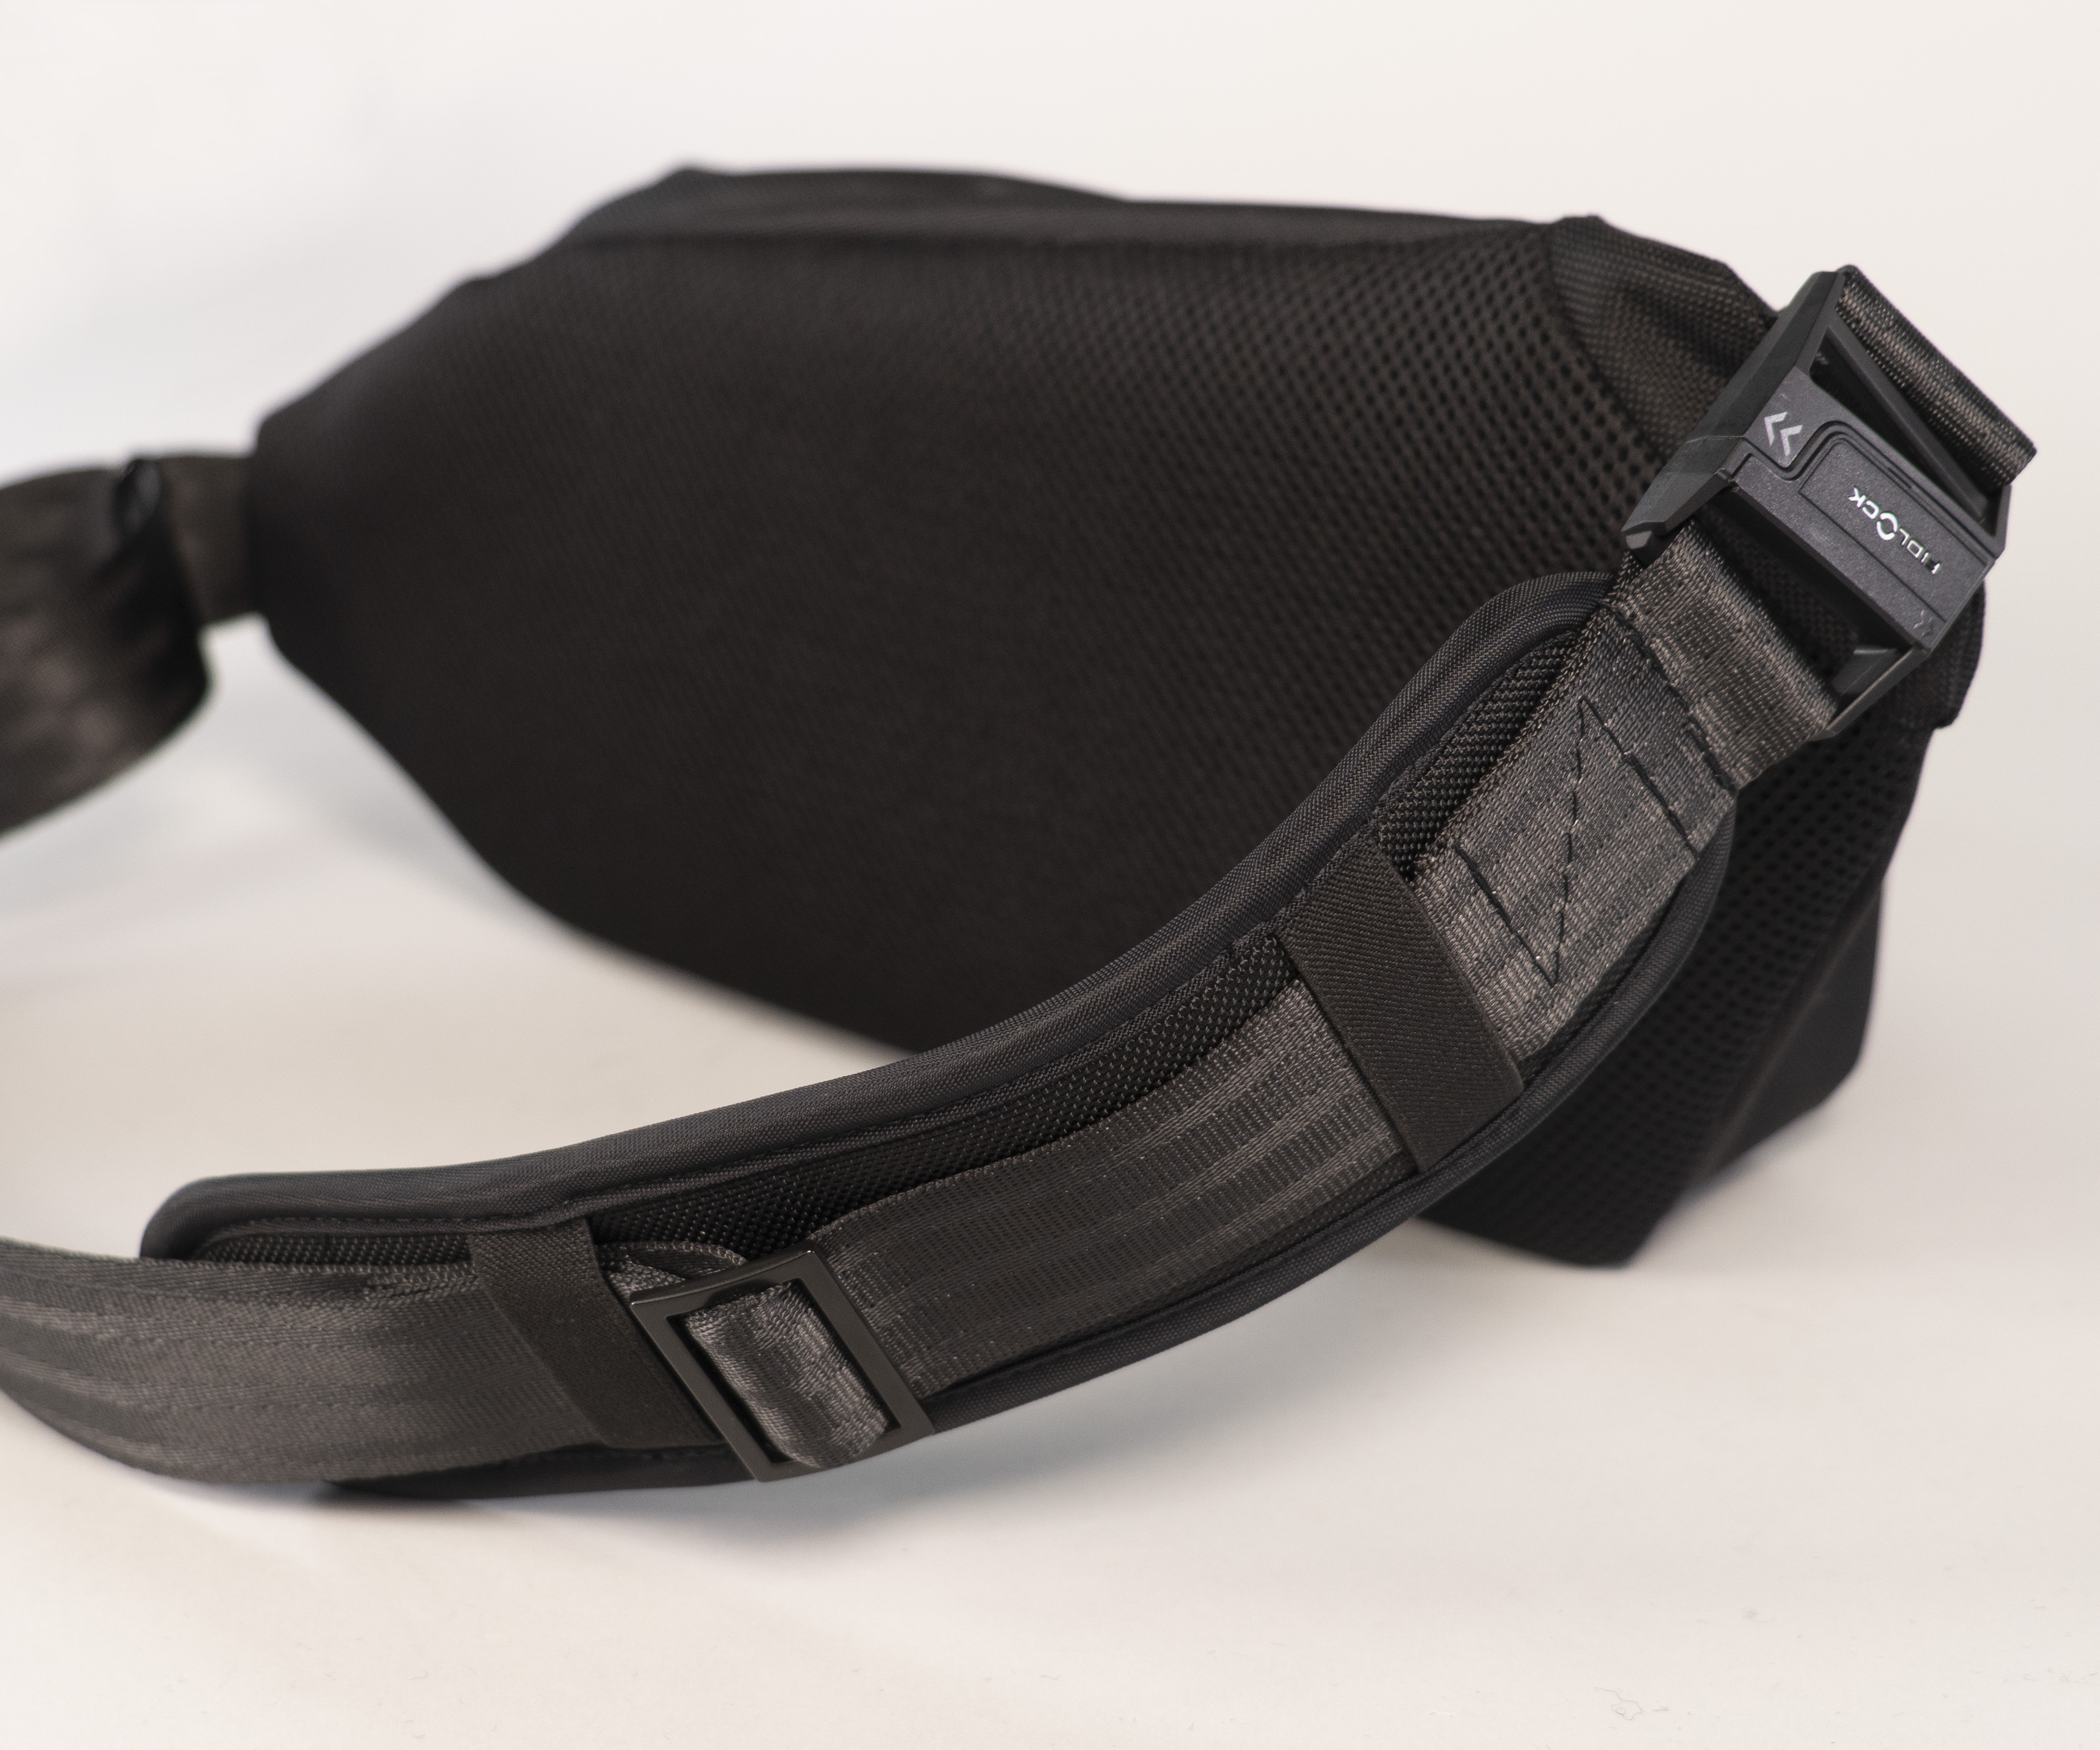 Magnetic Fidlock buckle; streamlined adjustable strap; moisture-wicking mesh backing